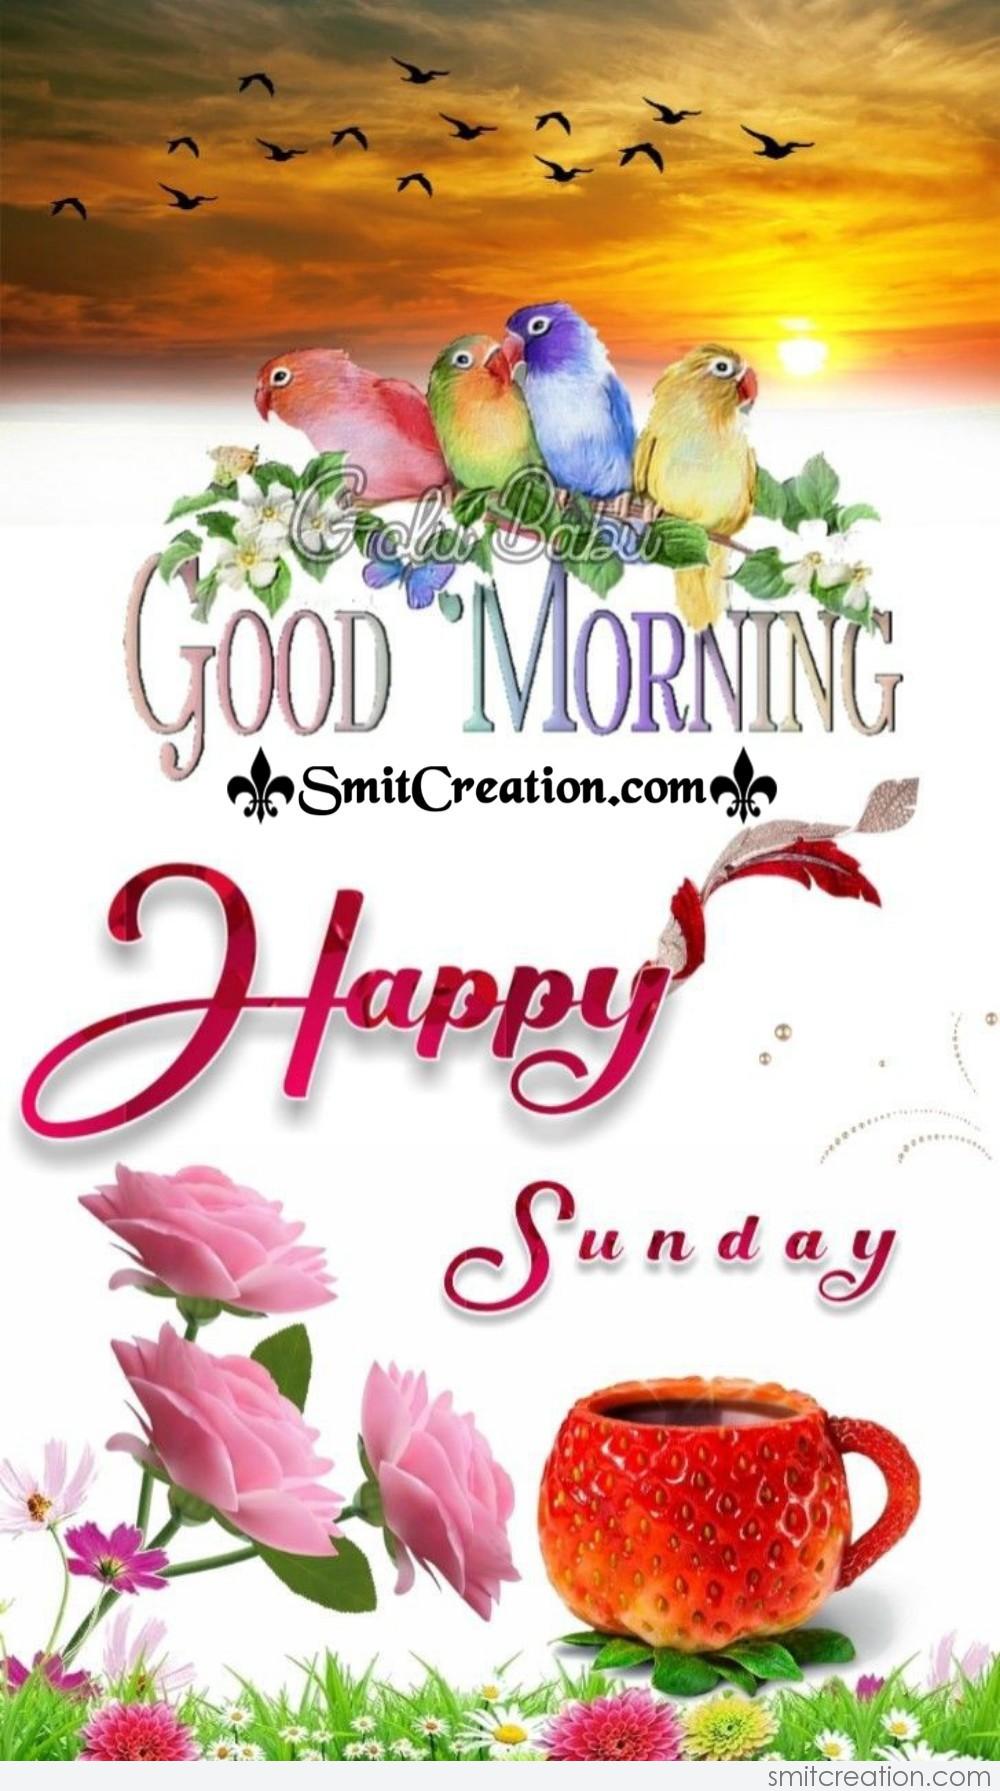 Good Morning Happy Sunday - SmitCreation.com